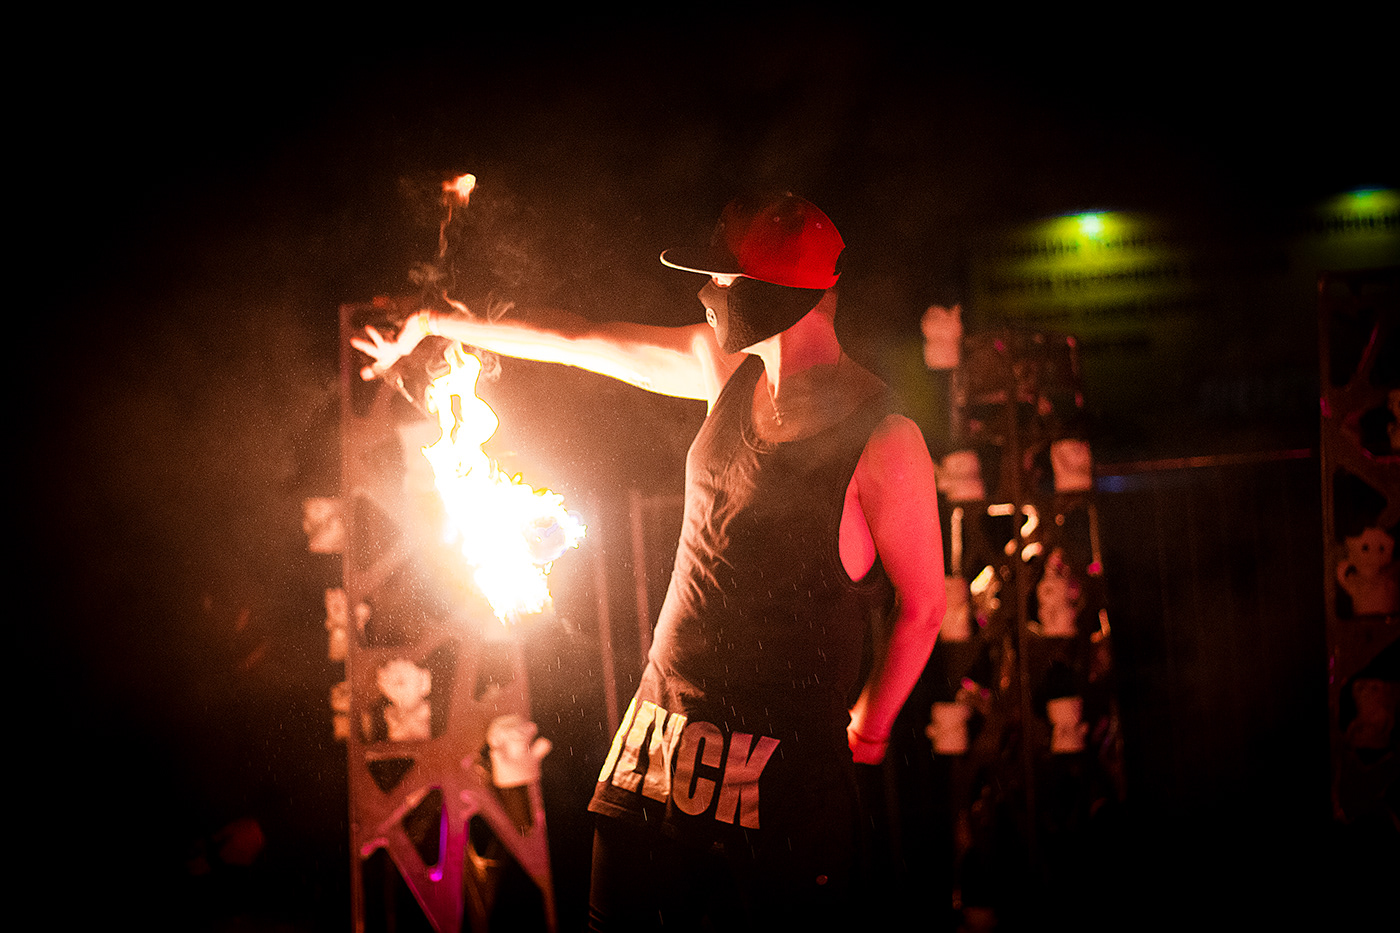 fire fireshow burningman kiev Show festival man night